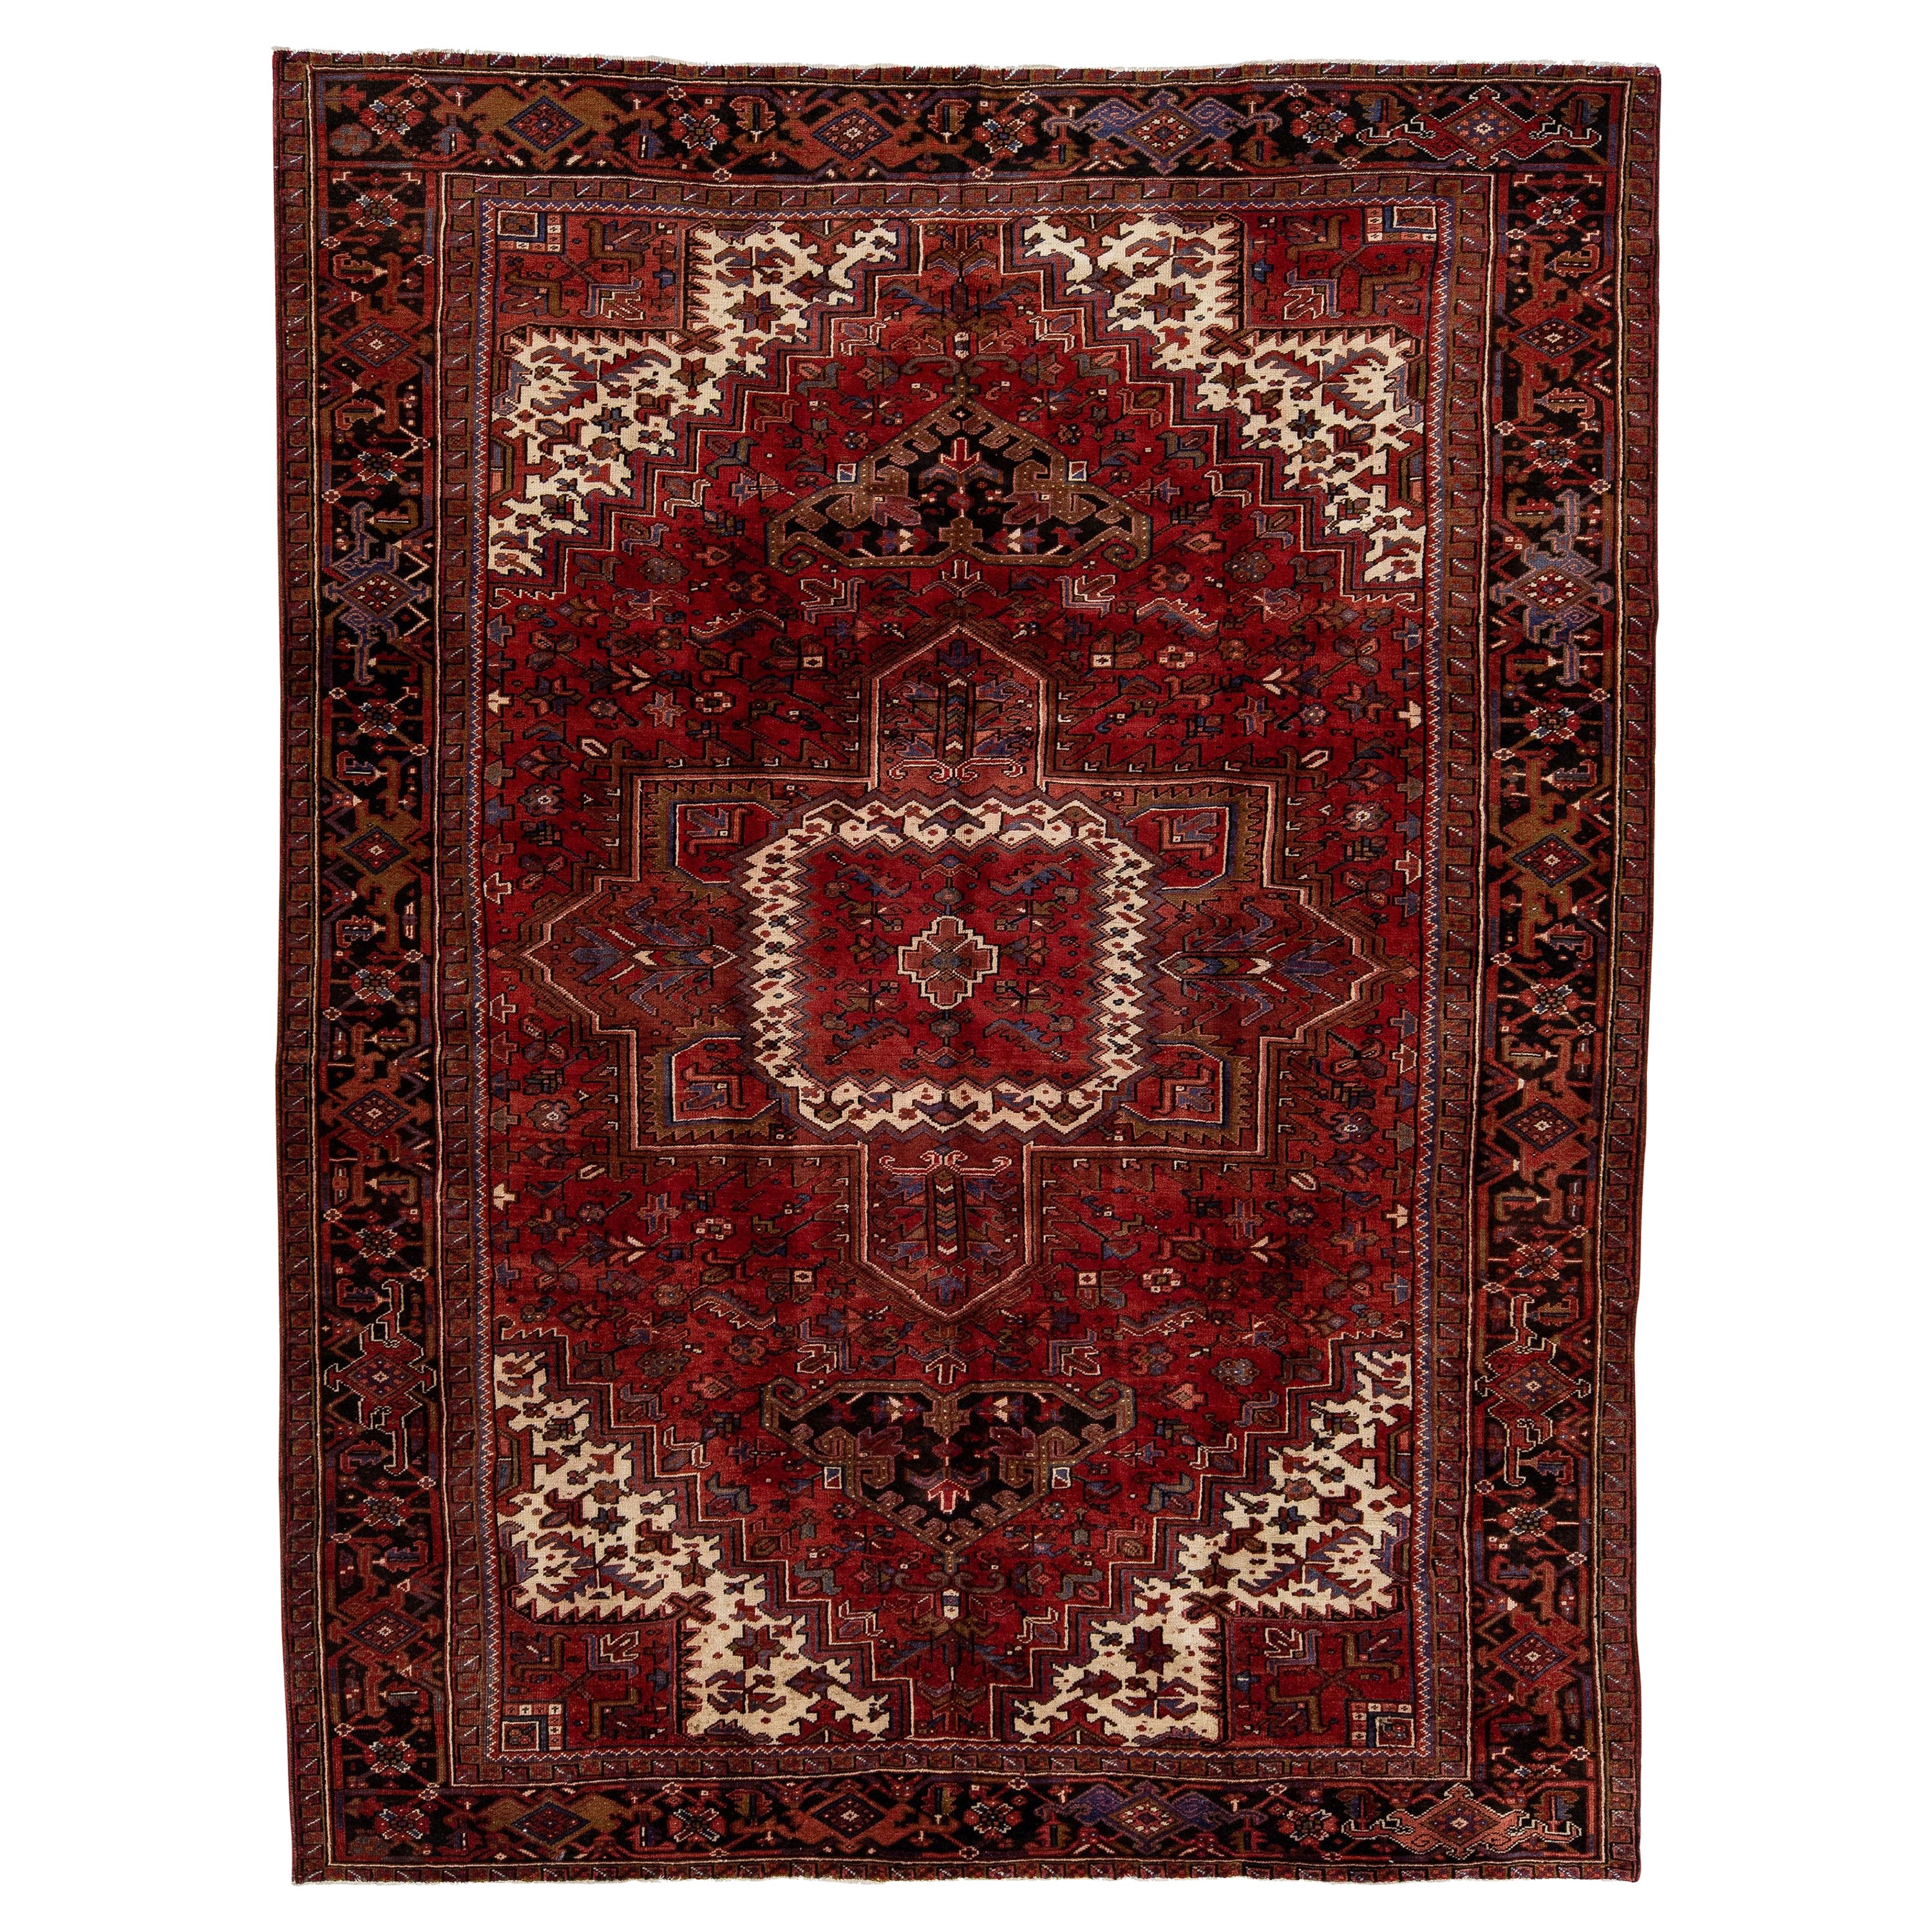 Antique Heriz Red Handmade Persian Wool Rug with Medallion Motif